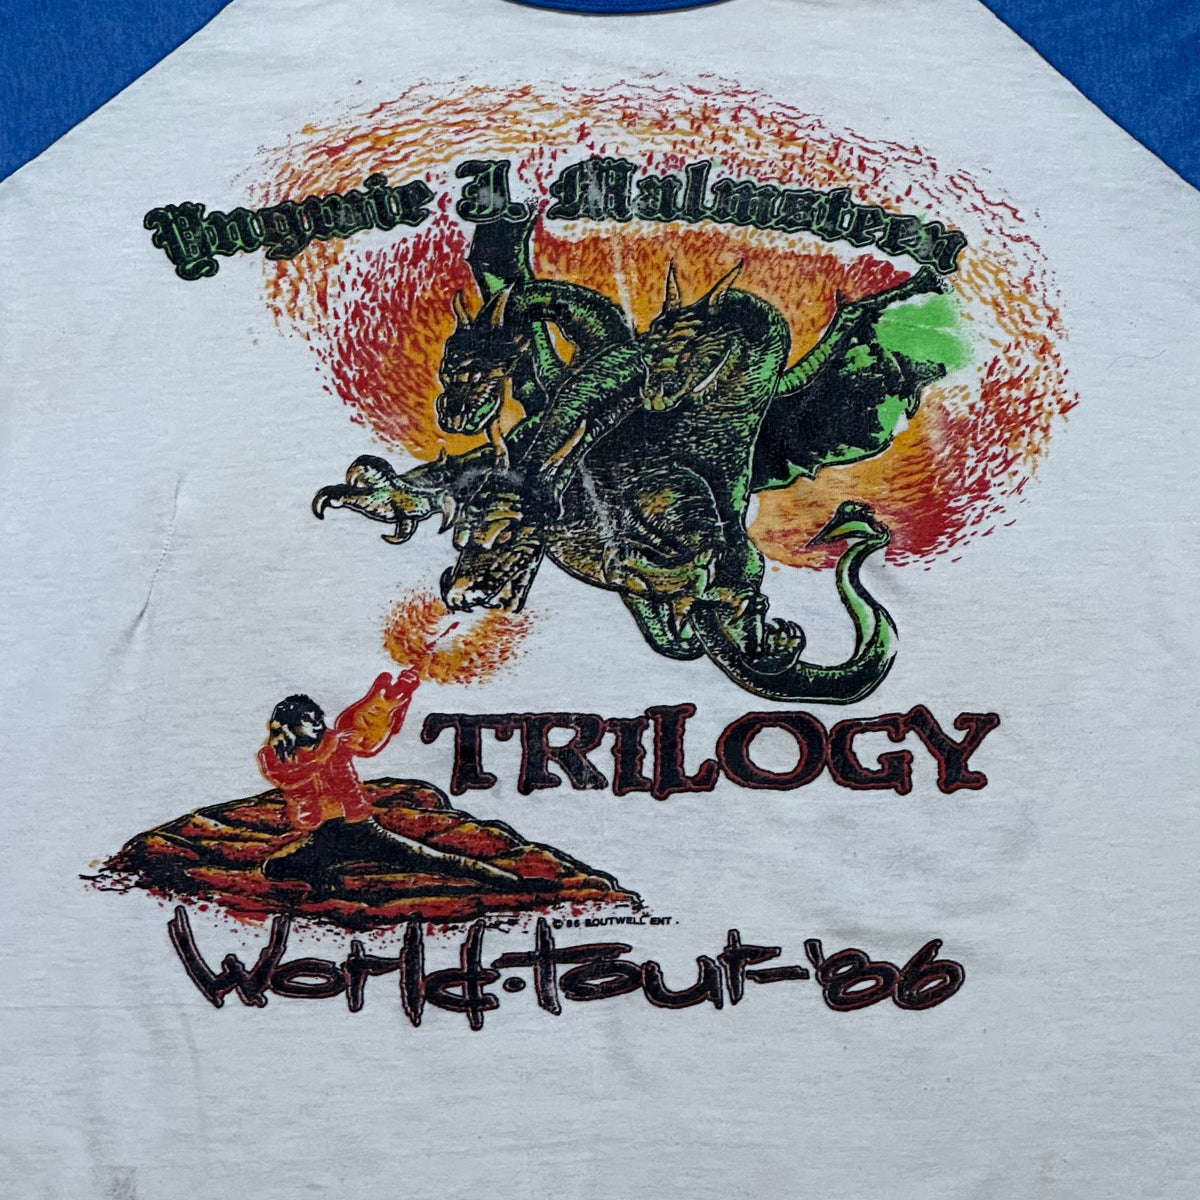 1986 Yngwie Malmsteen Trilogy World Tour shirt